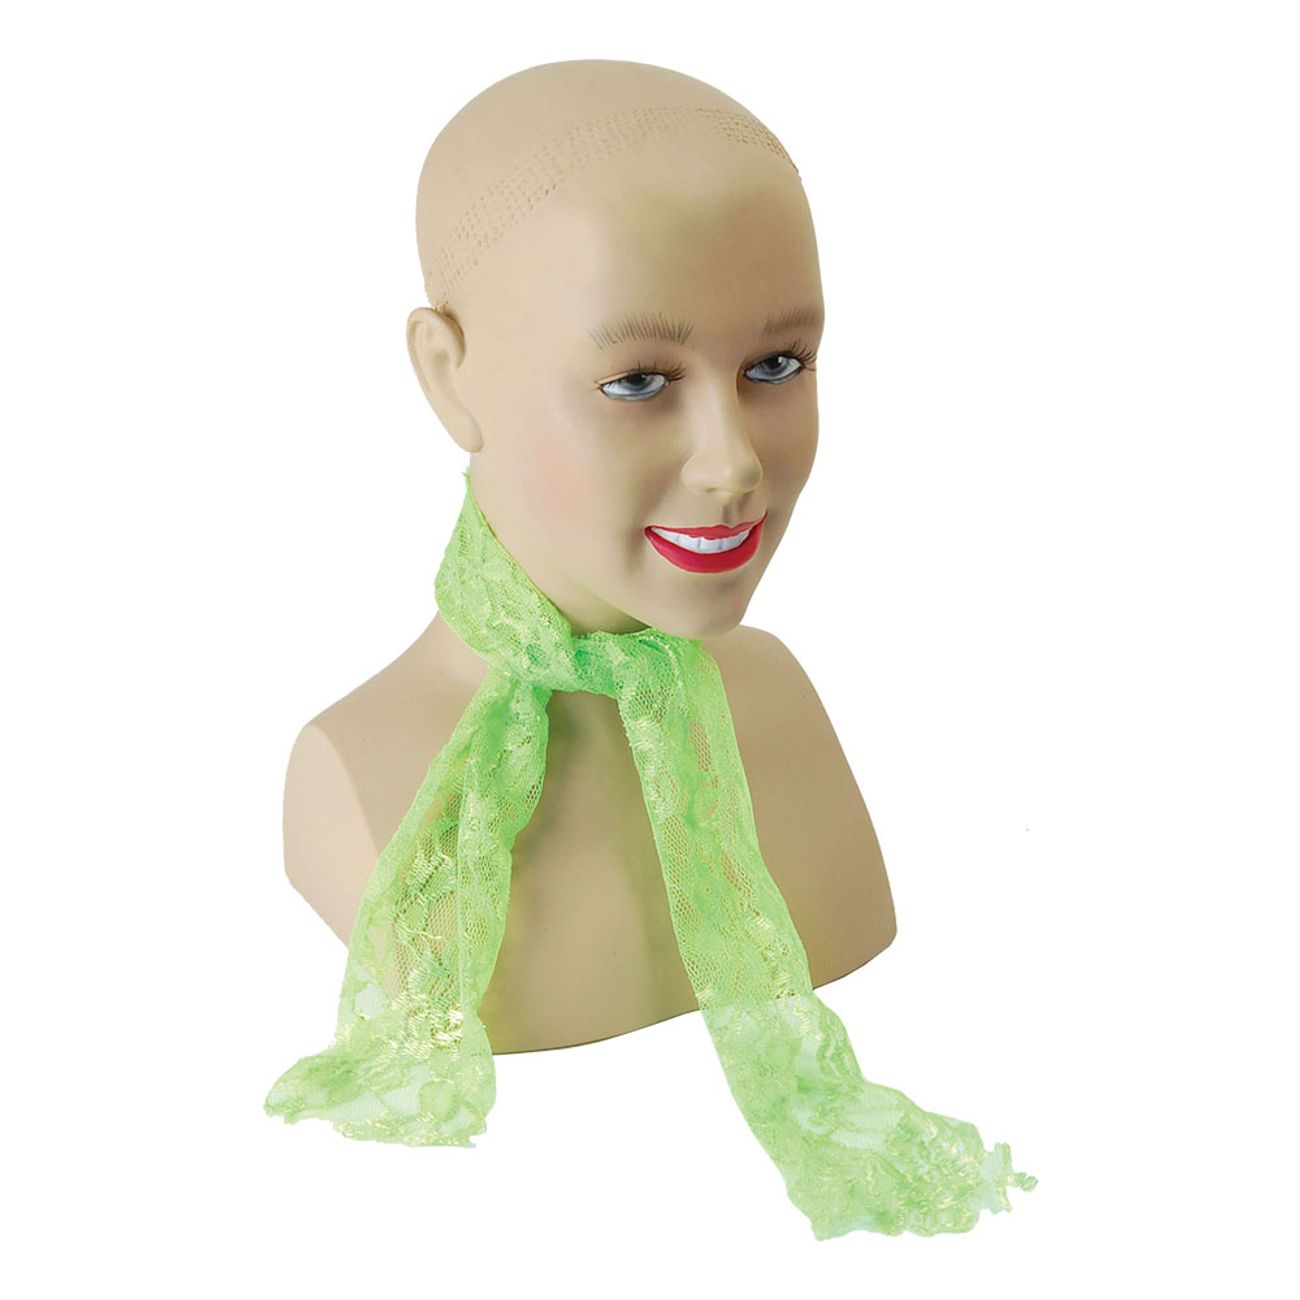 80-tals-scarf-neon-gron-1